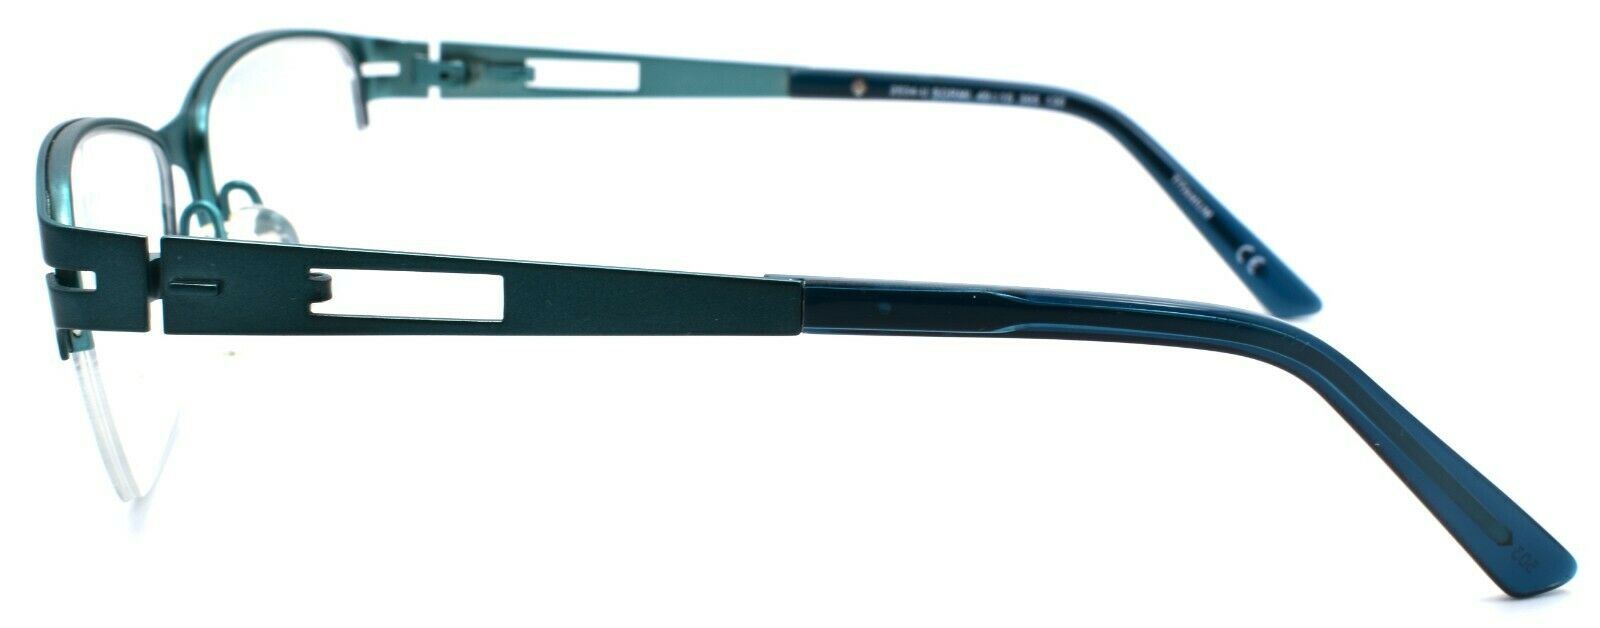 3-Skaga 2534-U Sormi 305 Kids Glasses Frames Half Rim TITANIUM 49-15-130 Green-IKSpecs